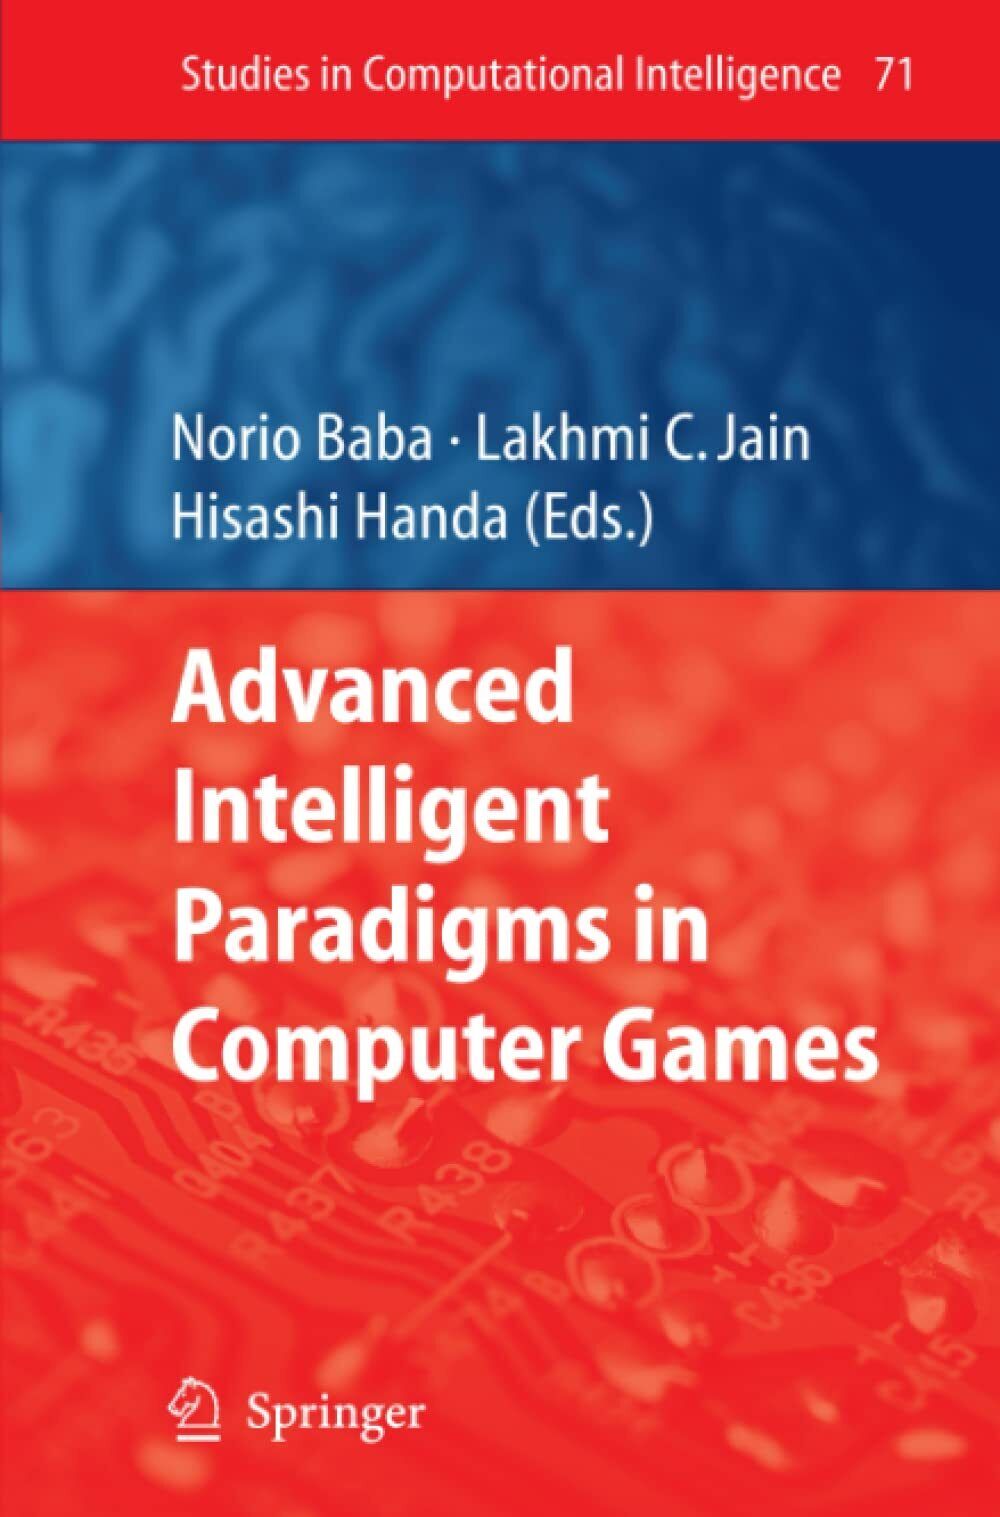 Advanced Intelligent Paradigms in Computer Games - Norio Baba - Springer, 2010 libro usato